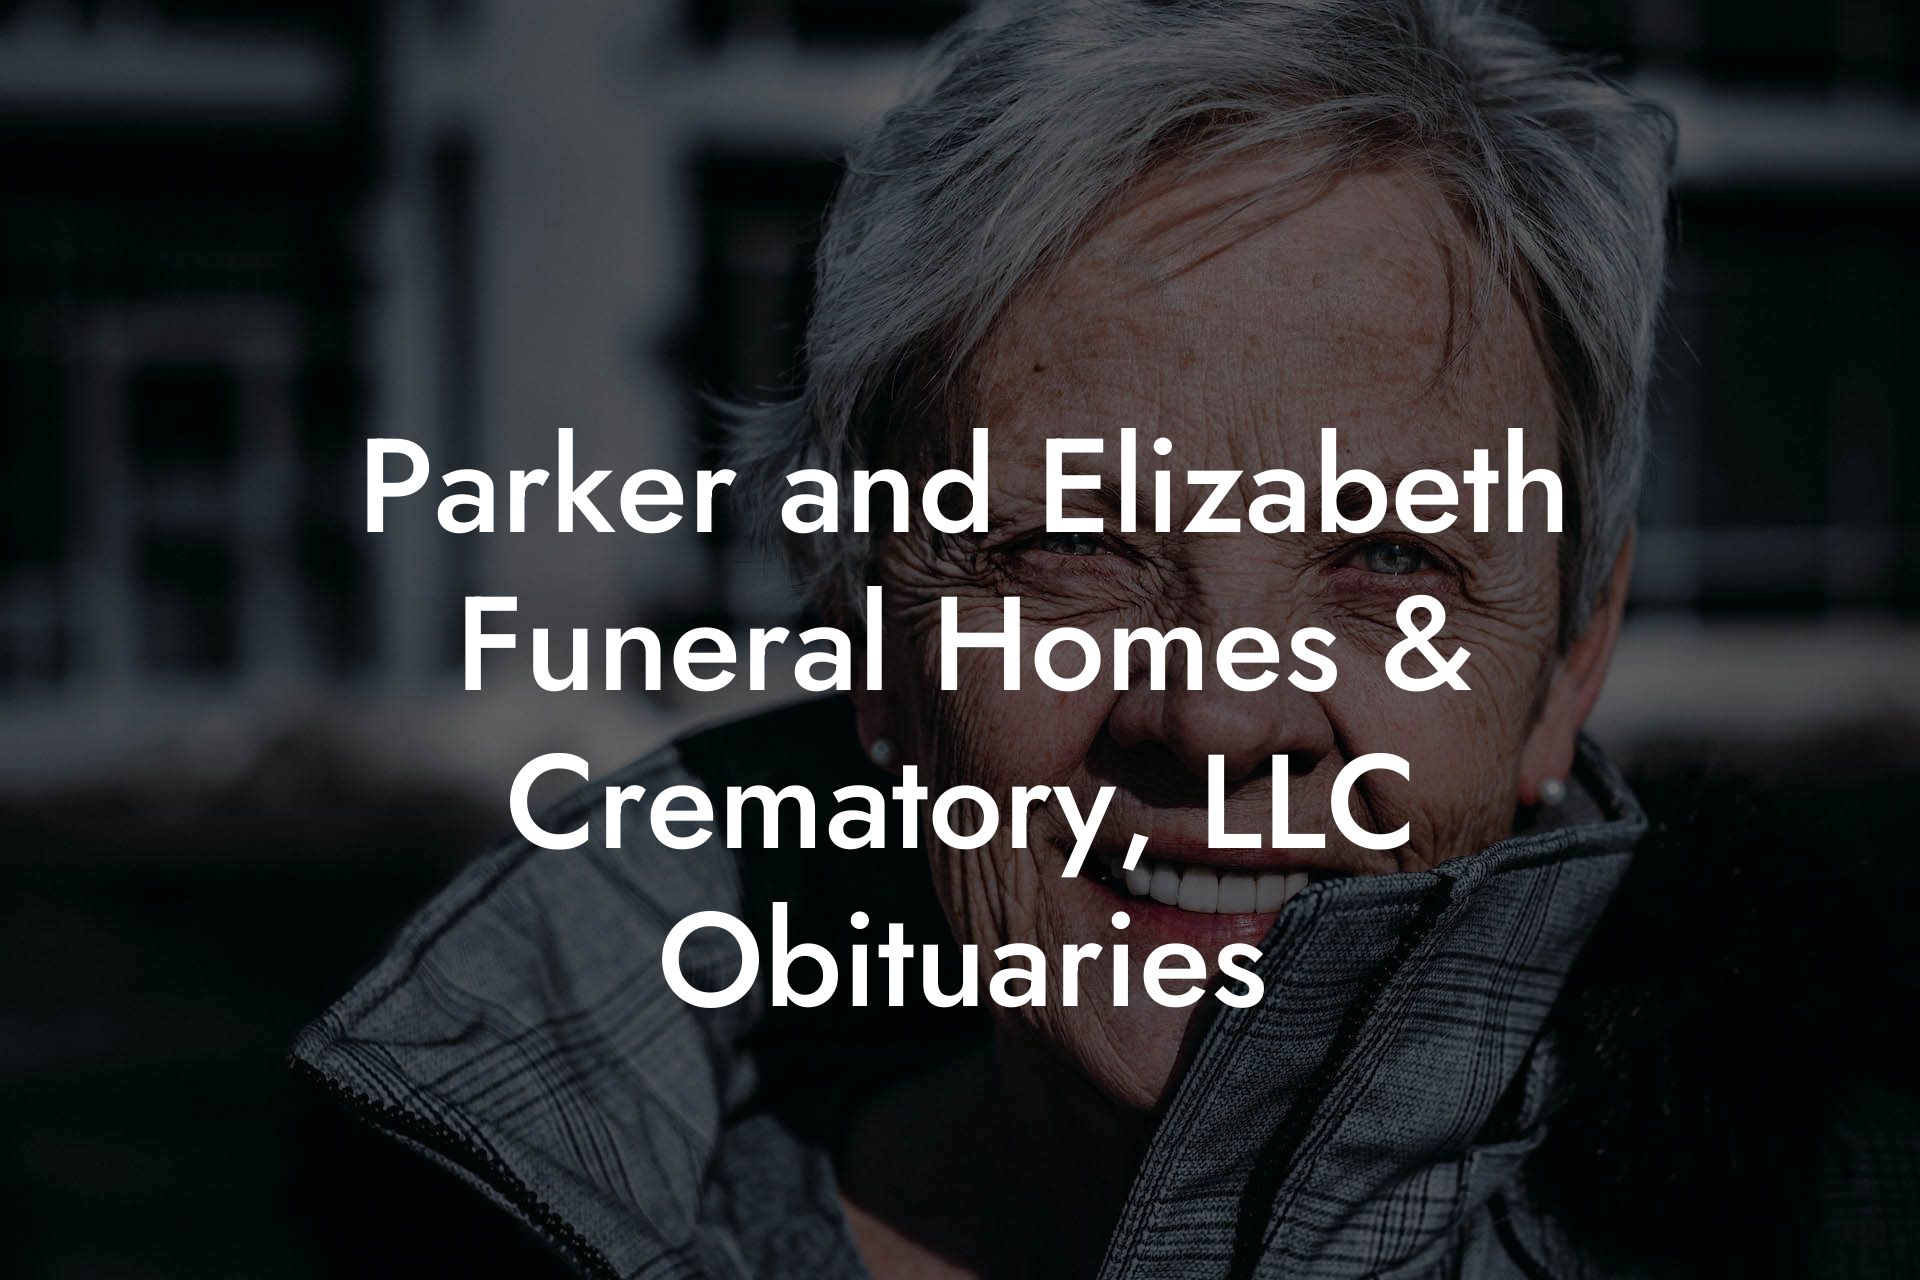 Parker and Elizabeth Funeral Homes & Crematory, LLC Obituaries